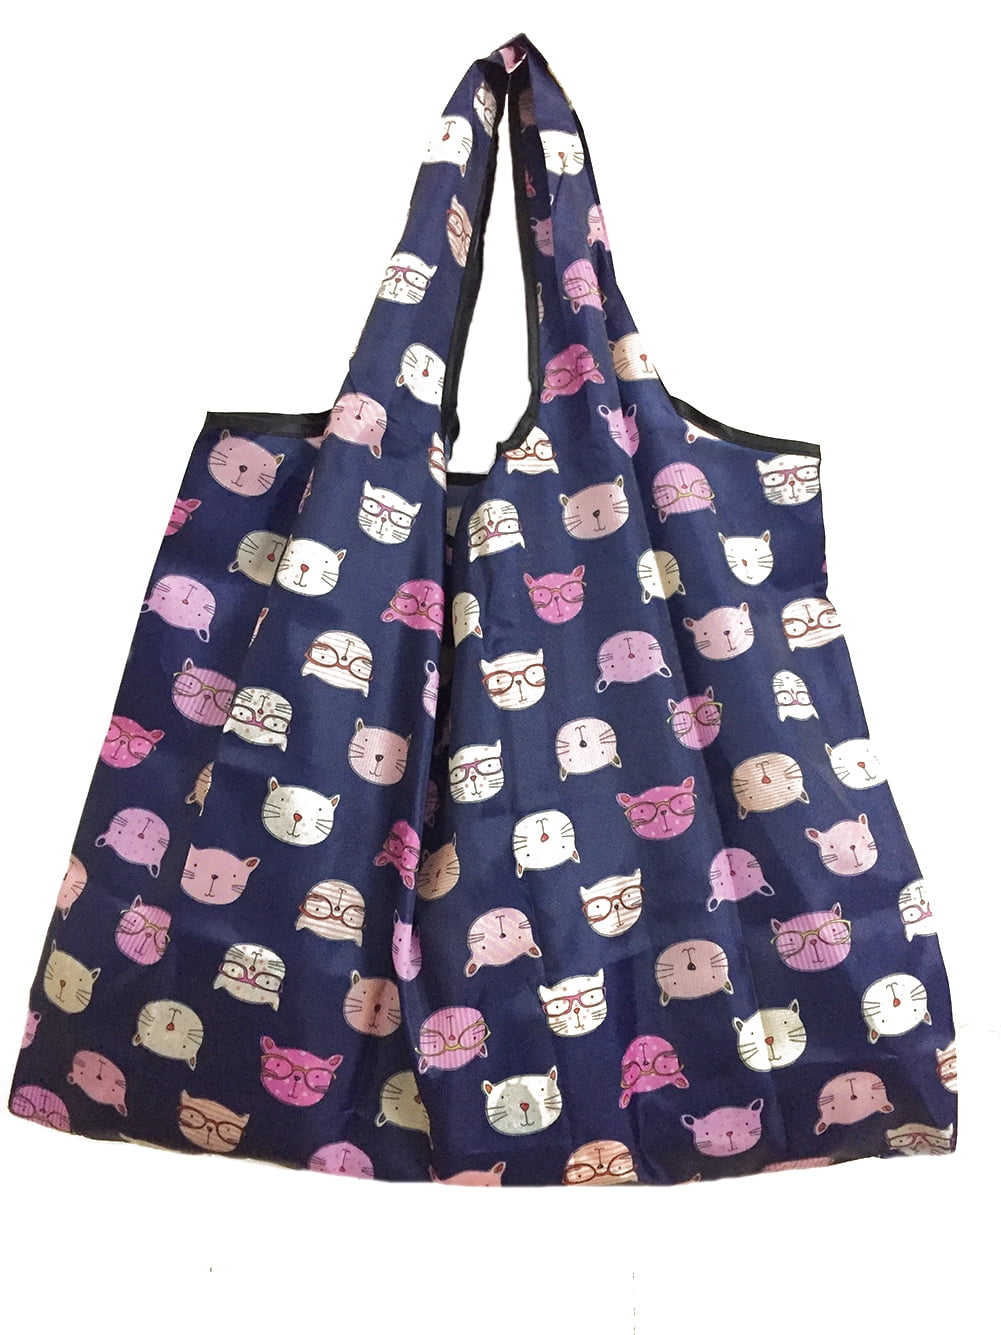 New Eco Shopping Travel Shoulder Bag Pouch Tote Handbag Folding Reusable Bags